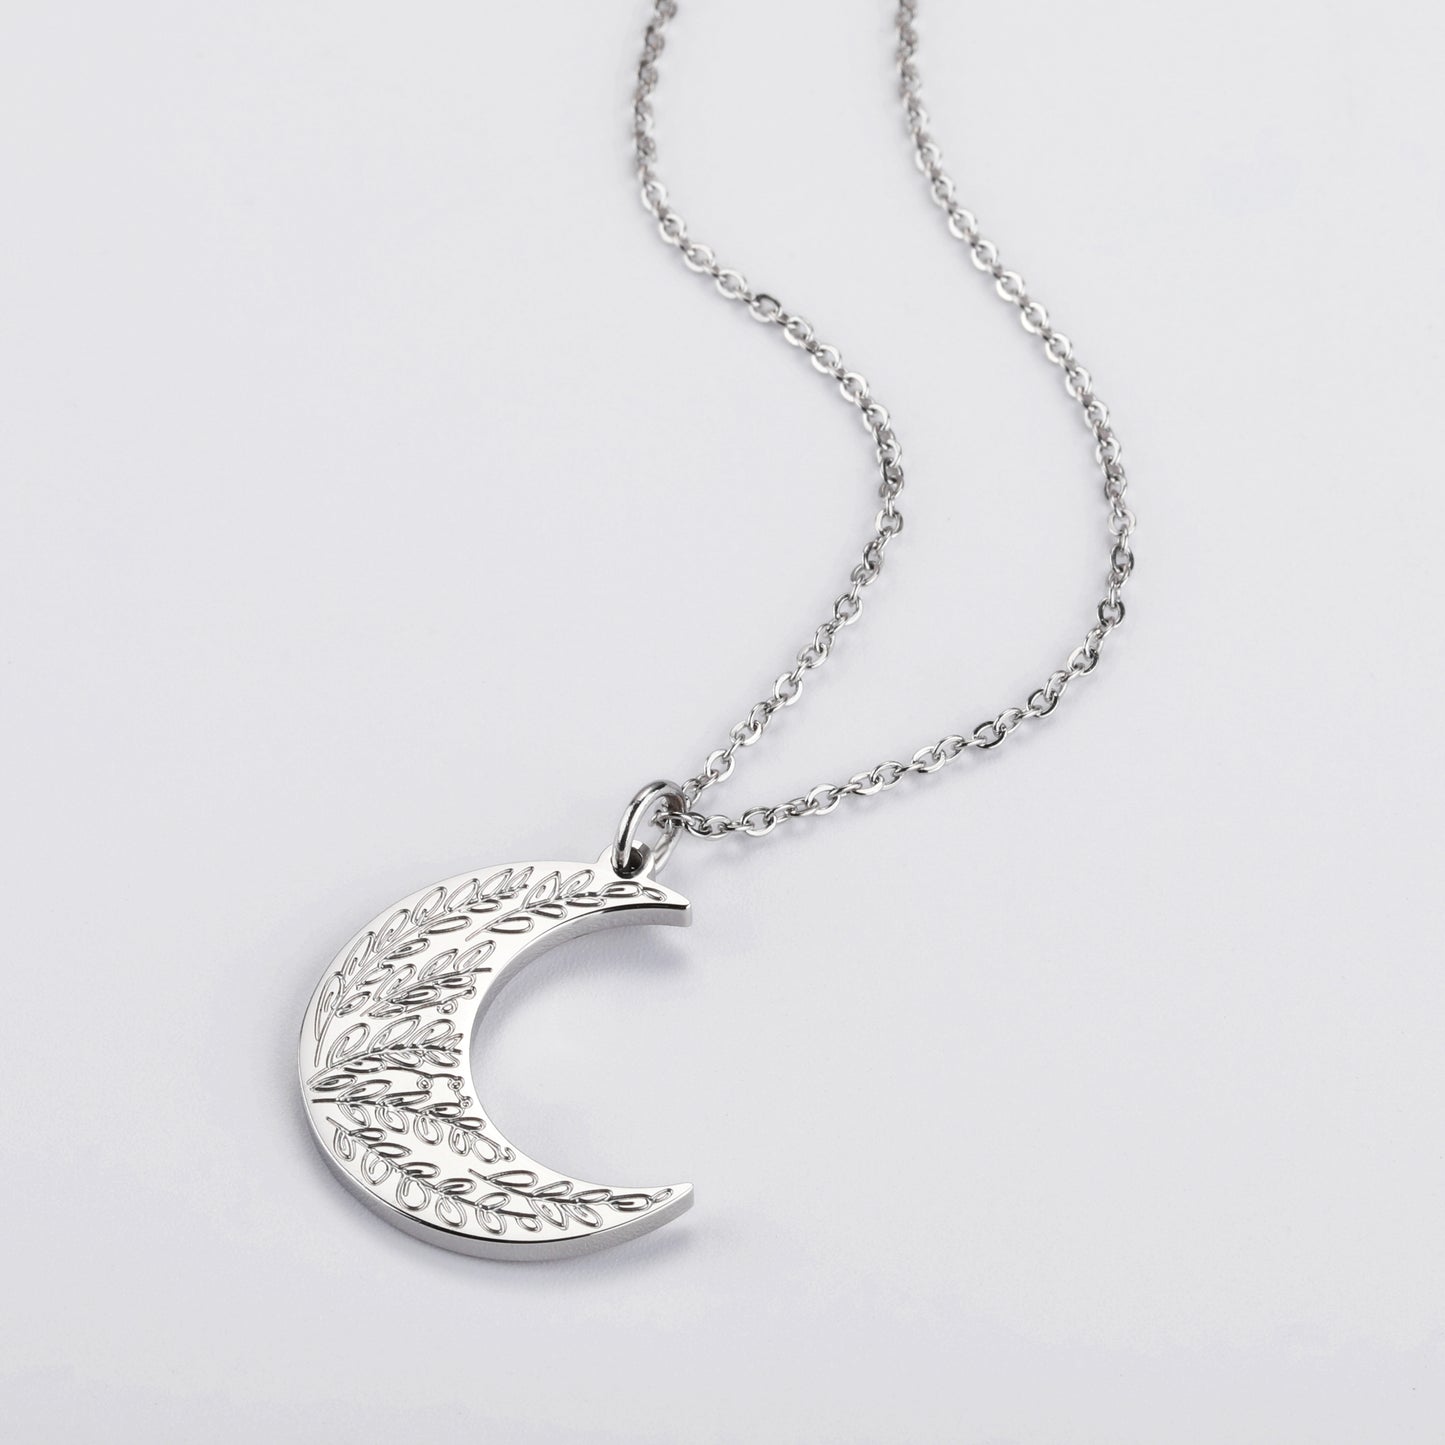 Darjali Jewelry Botanical Moon Necklace 18K White Gold